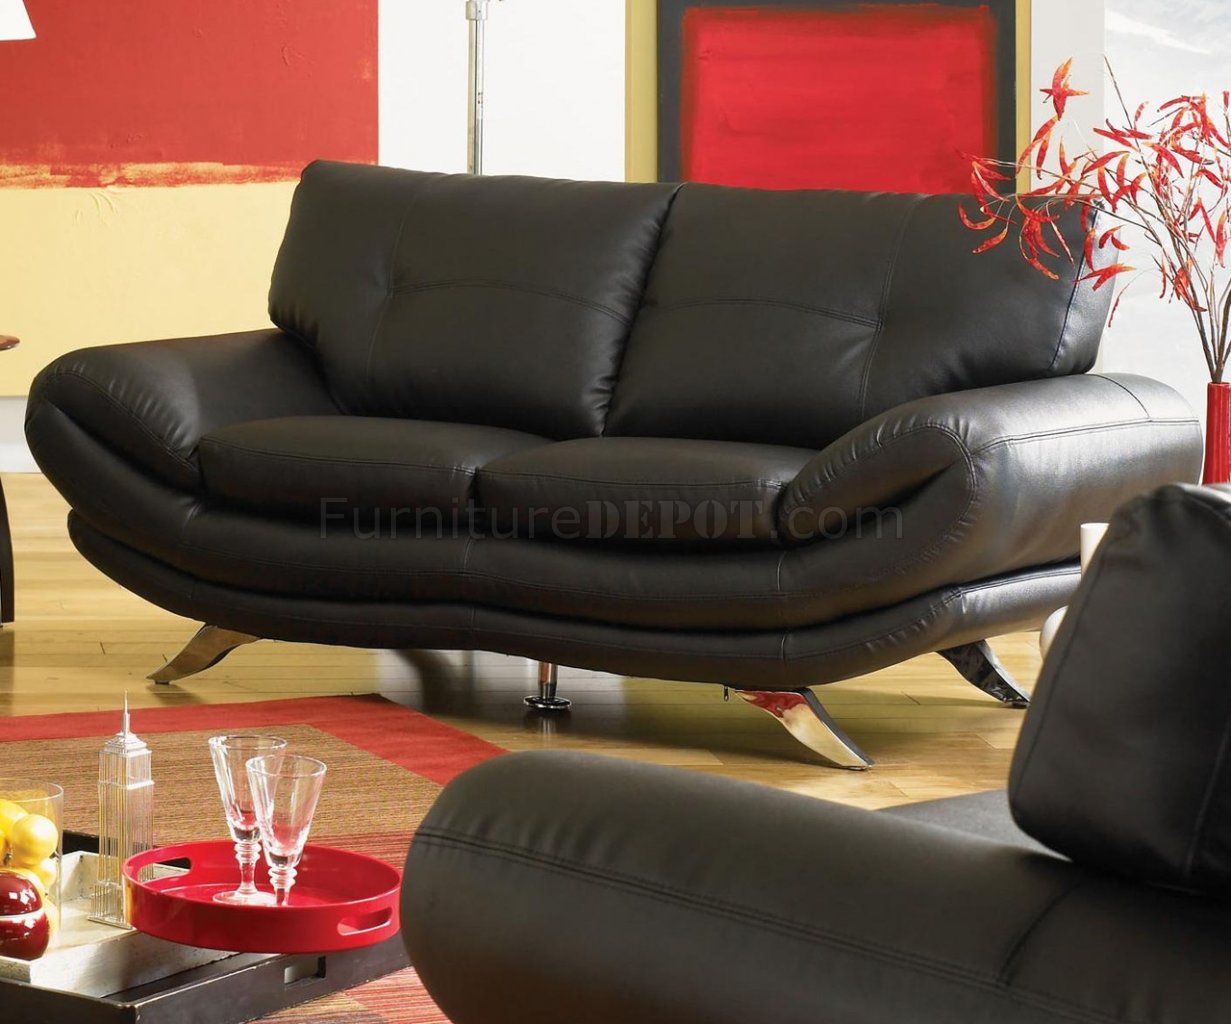 Contemporary Living Room U334 Black, Black Leather Sofa With Chrome Legs